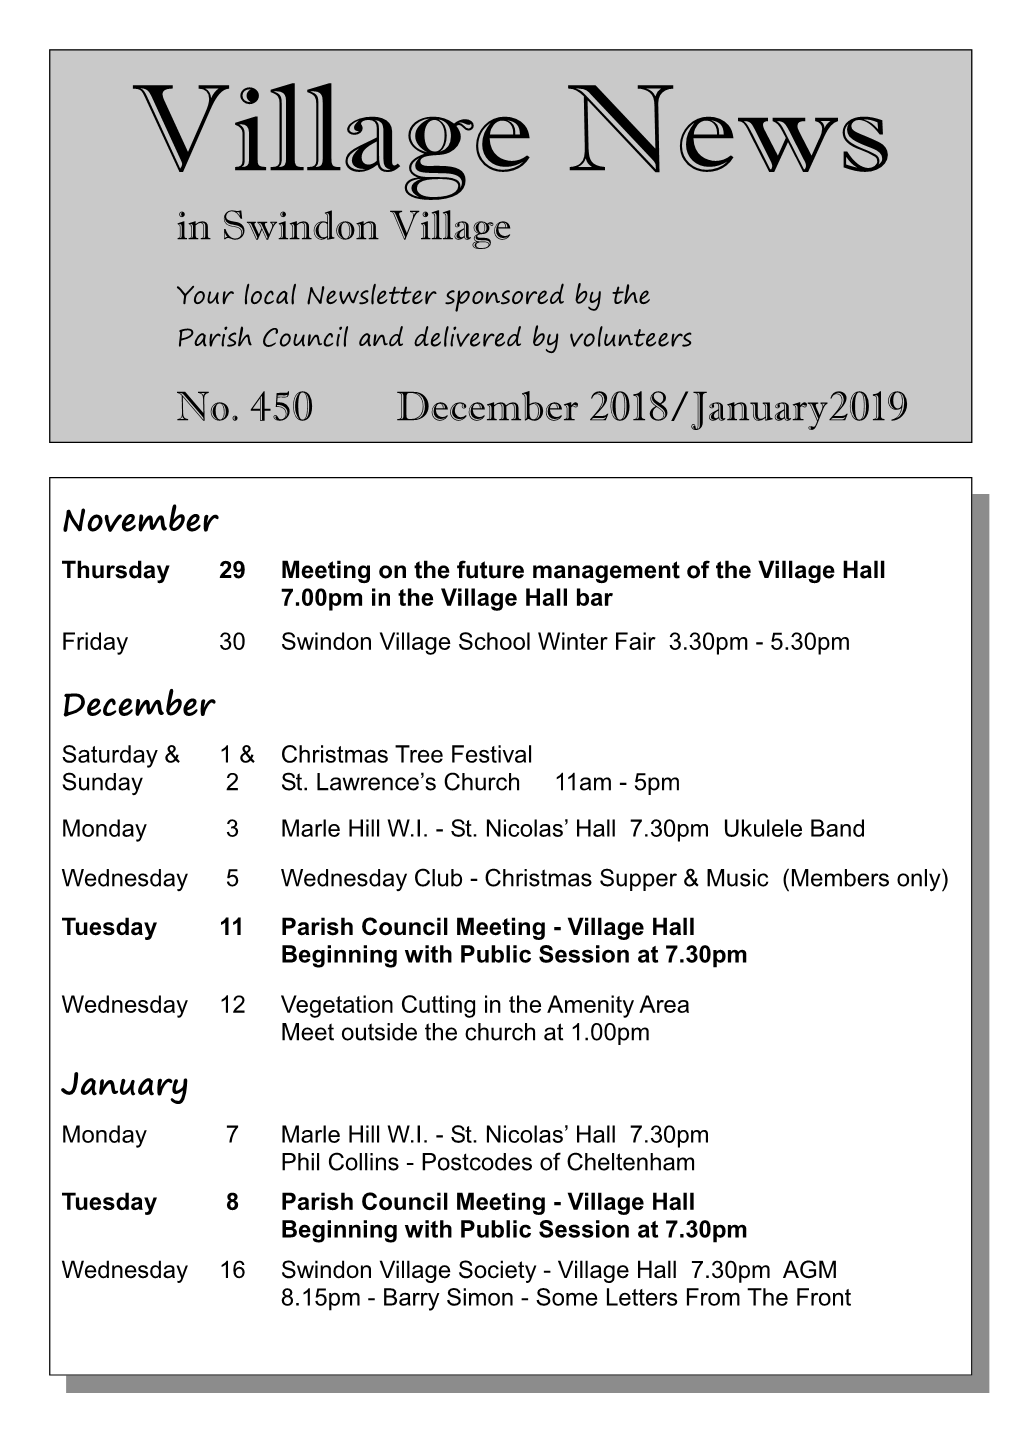 Village News December 2018/January 2019